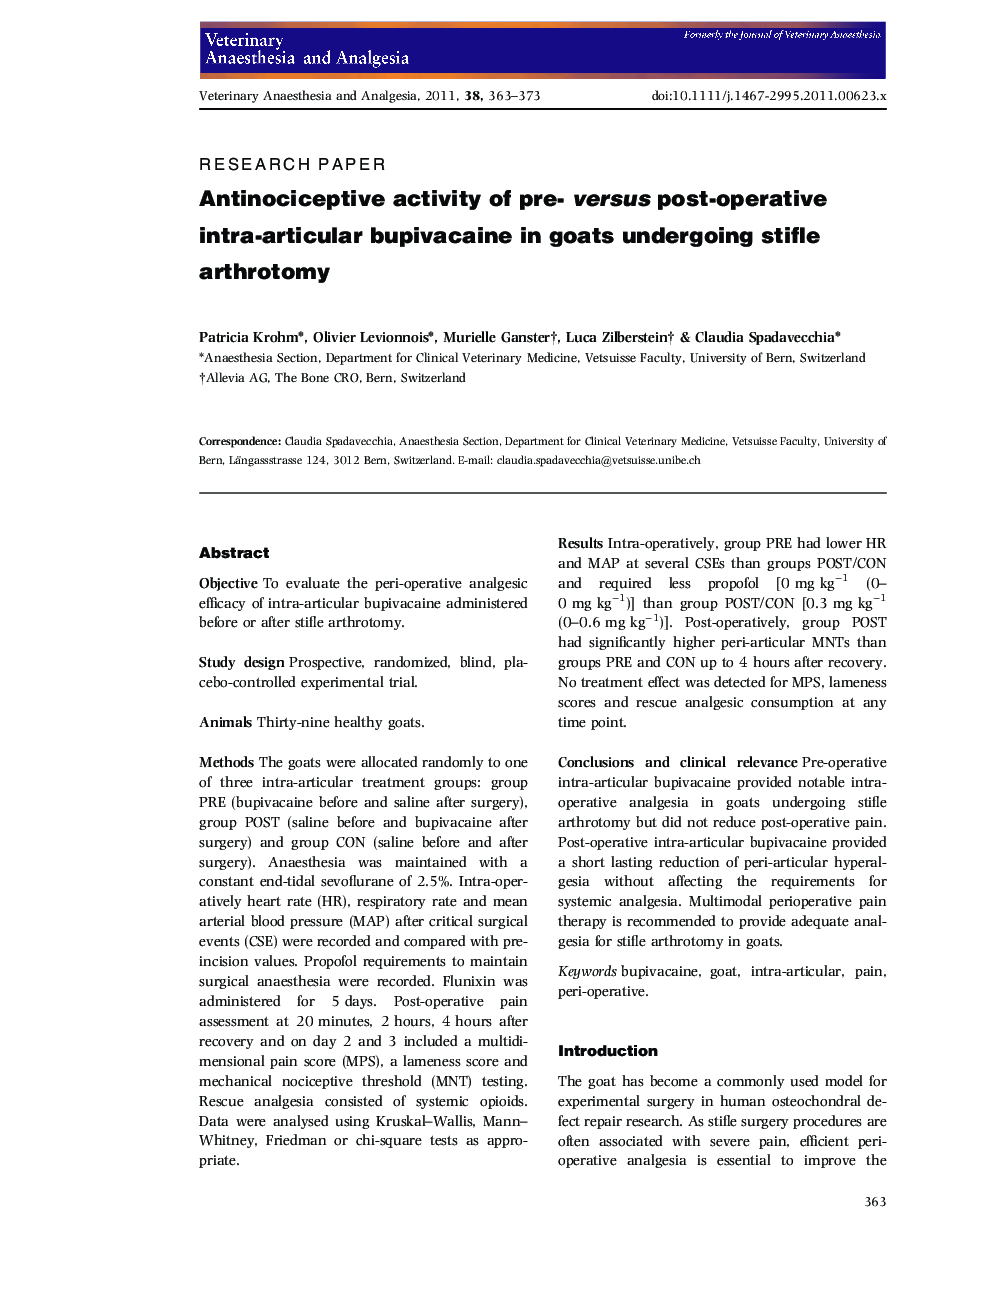 Antinociceptive activity of pre- versus post-operative intra-articular bupivacaine in goats undergoing stifle arthrotomy